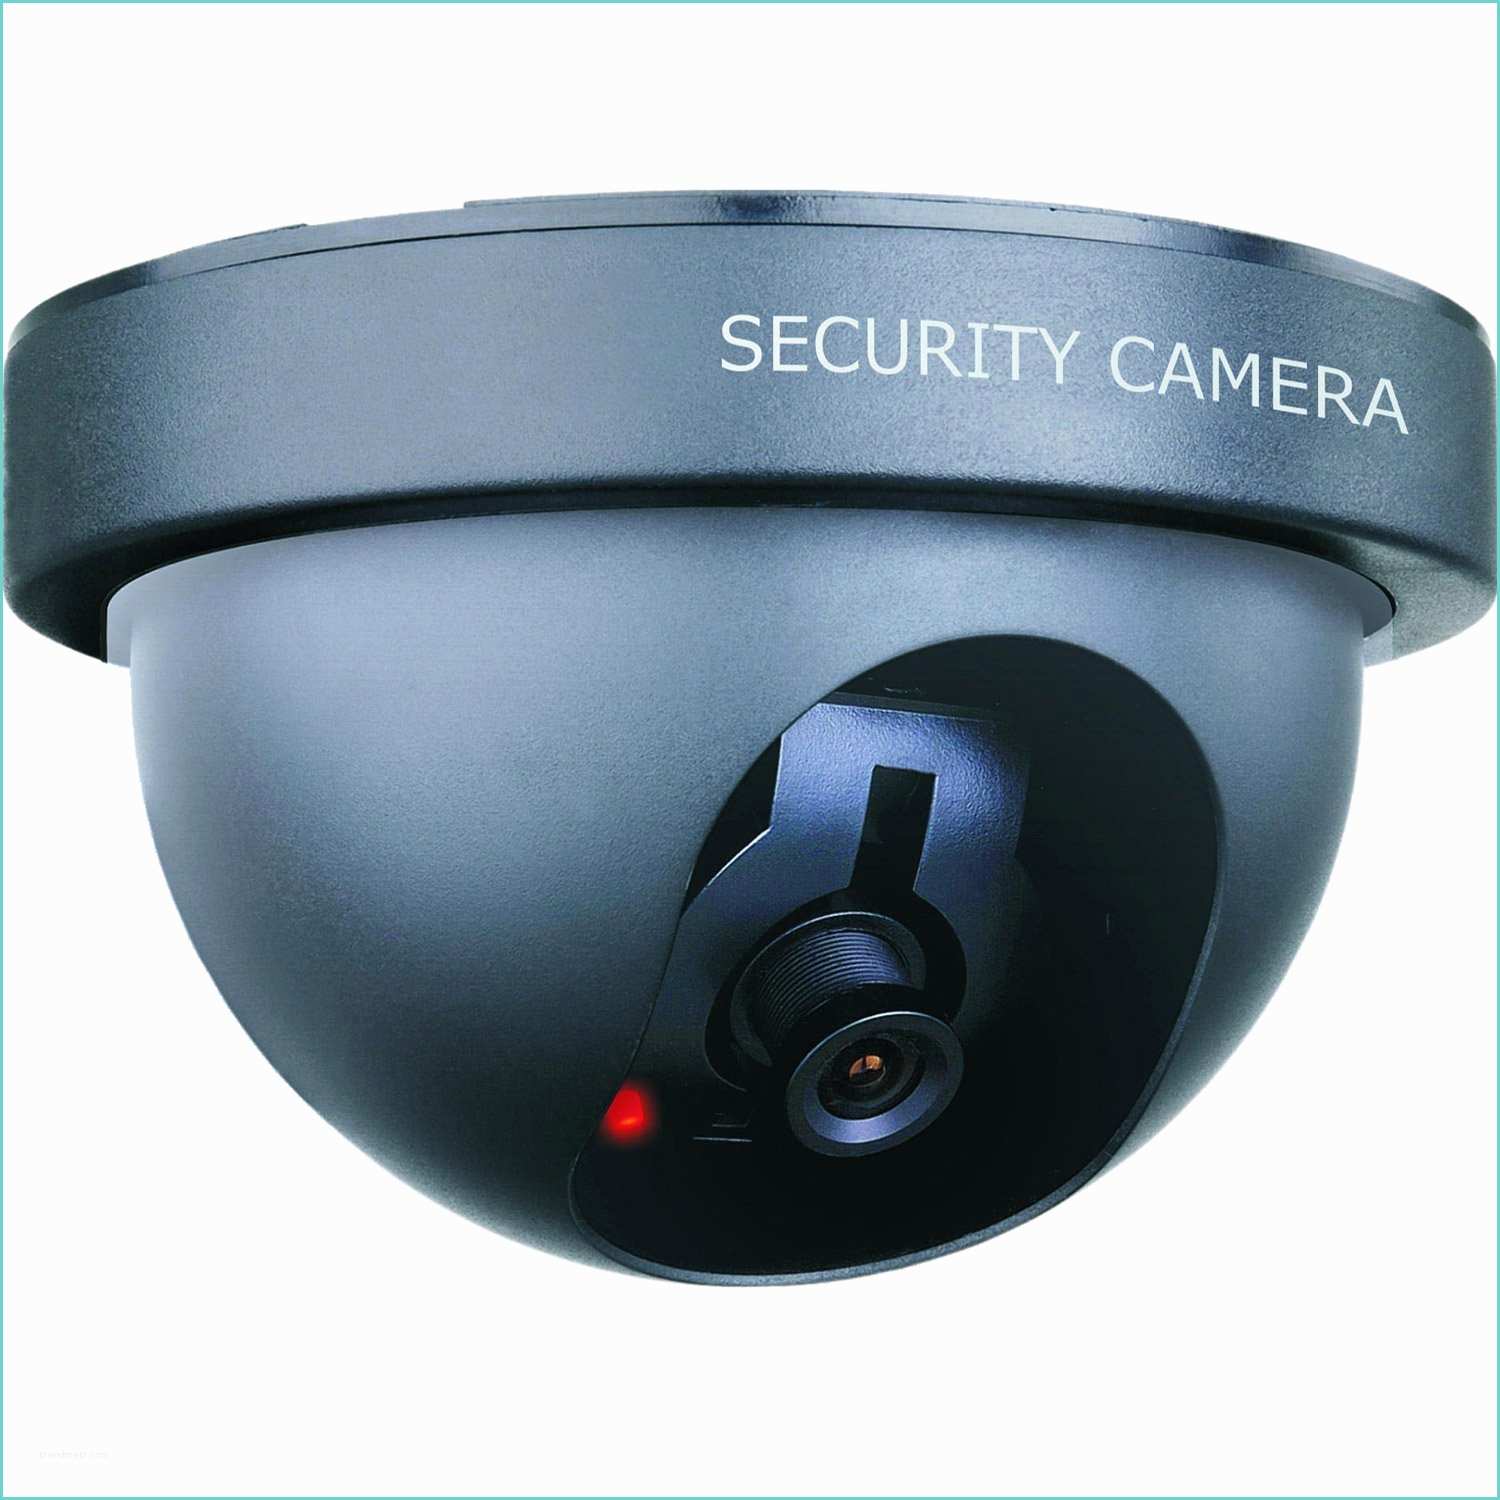 Camra De Surveillance Factice Caméra Factice Avec Led Clignotante Smartwares Cs44dfr